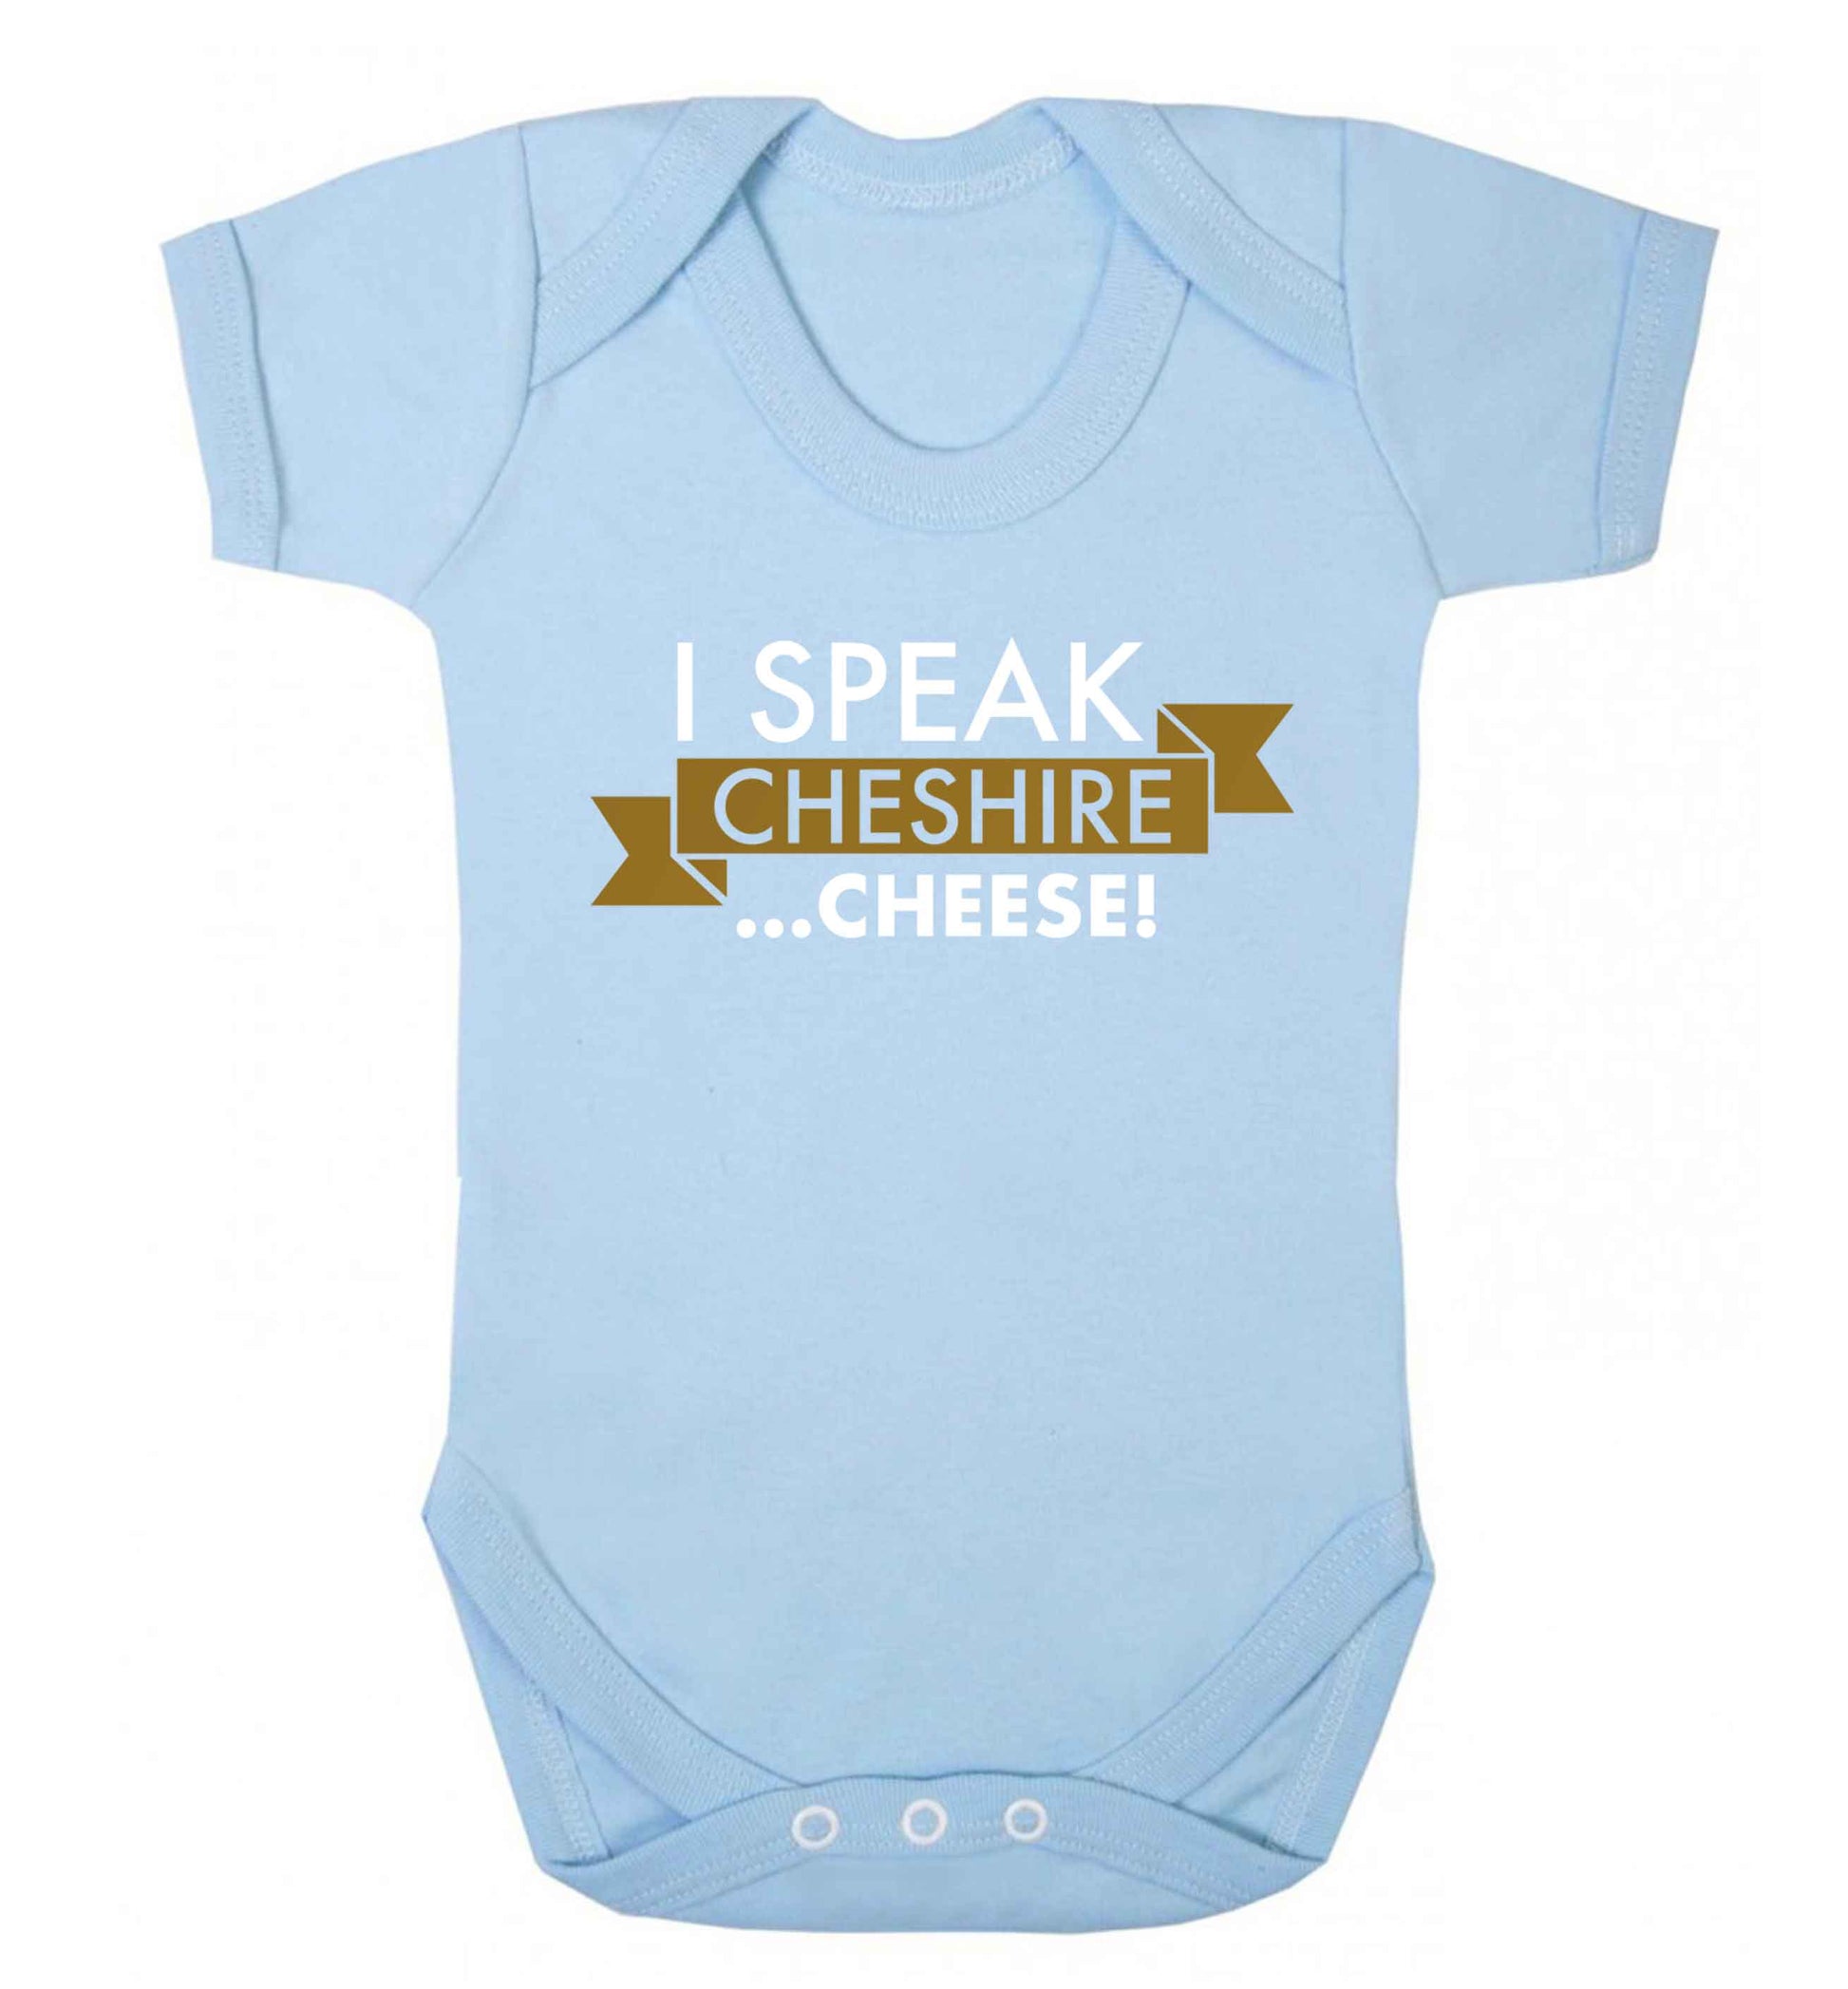 I speak Cheshire cheese Baby Vest pale blue 18-24 months